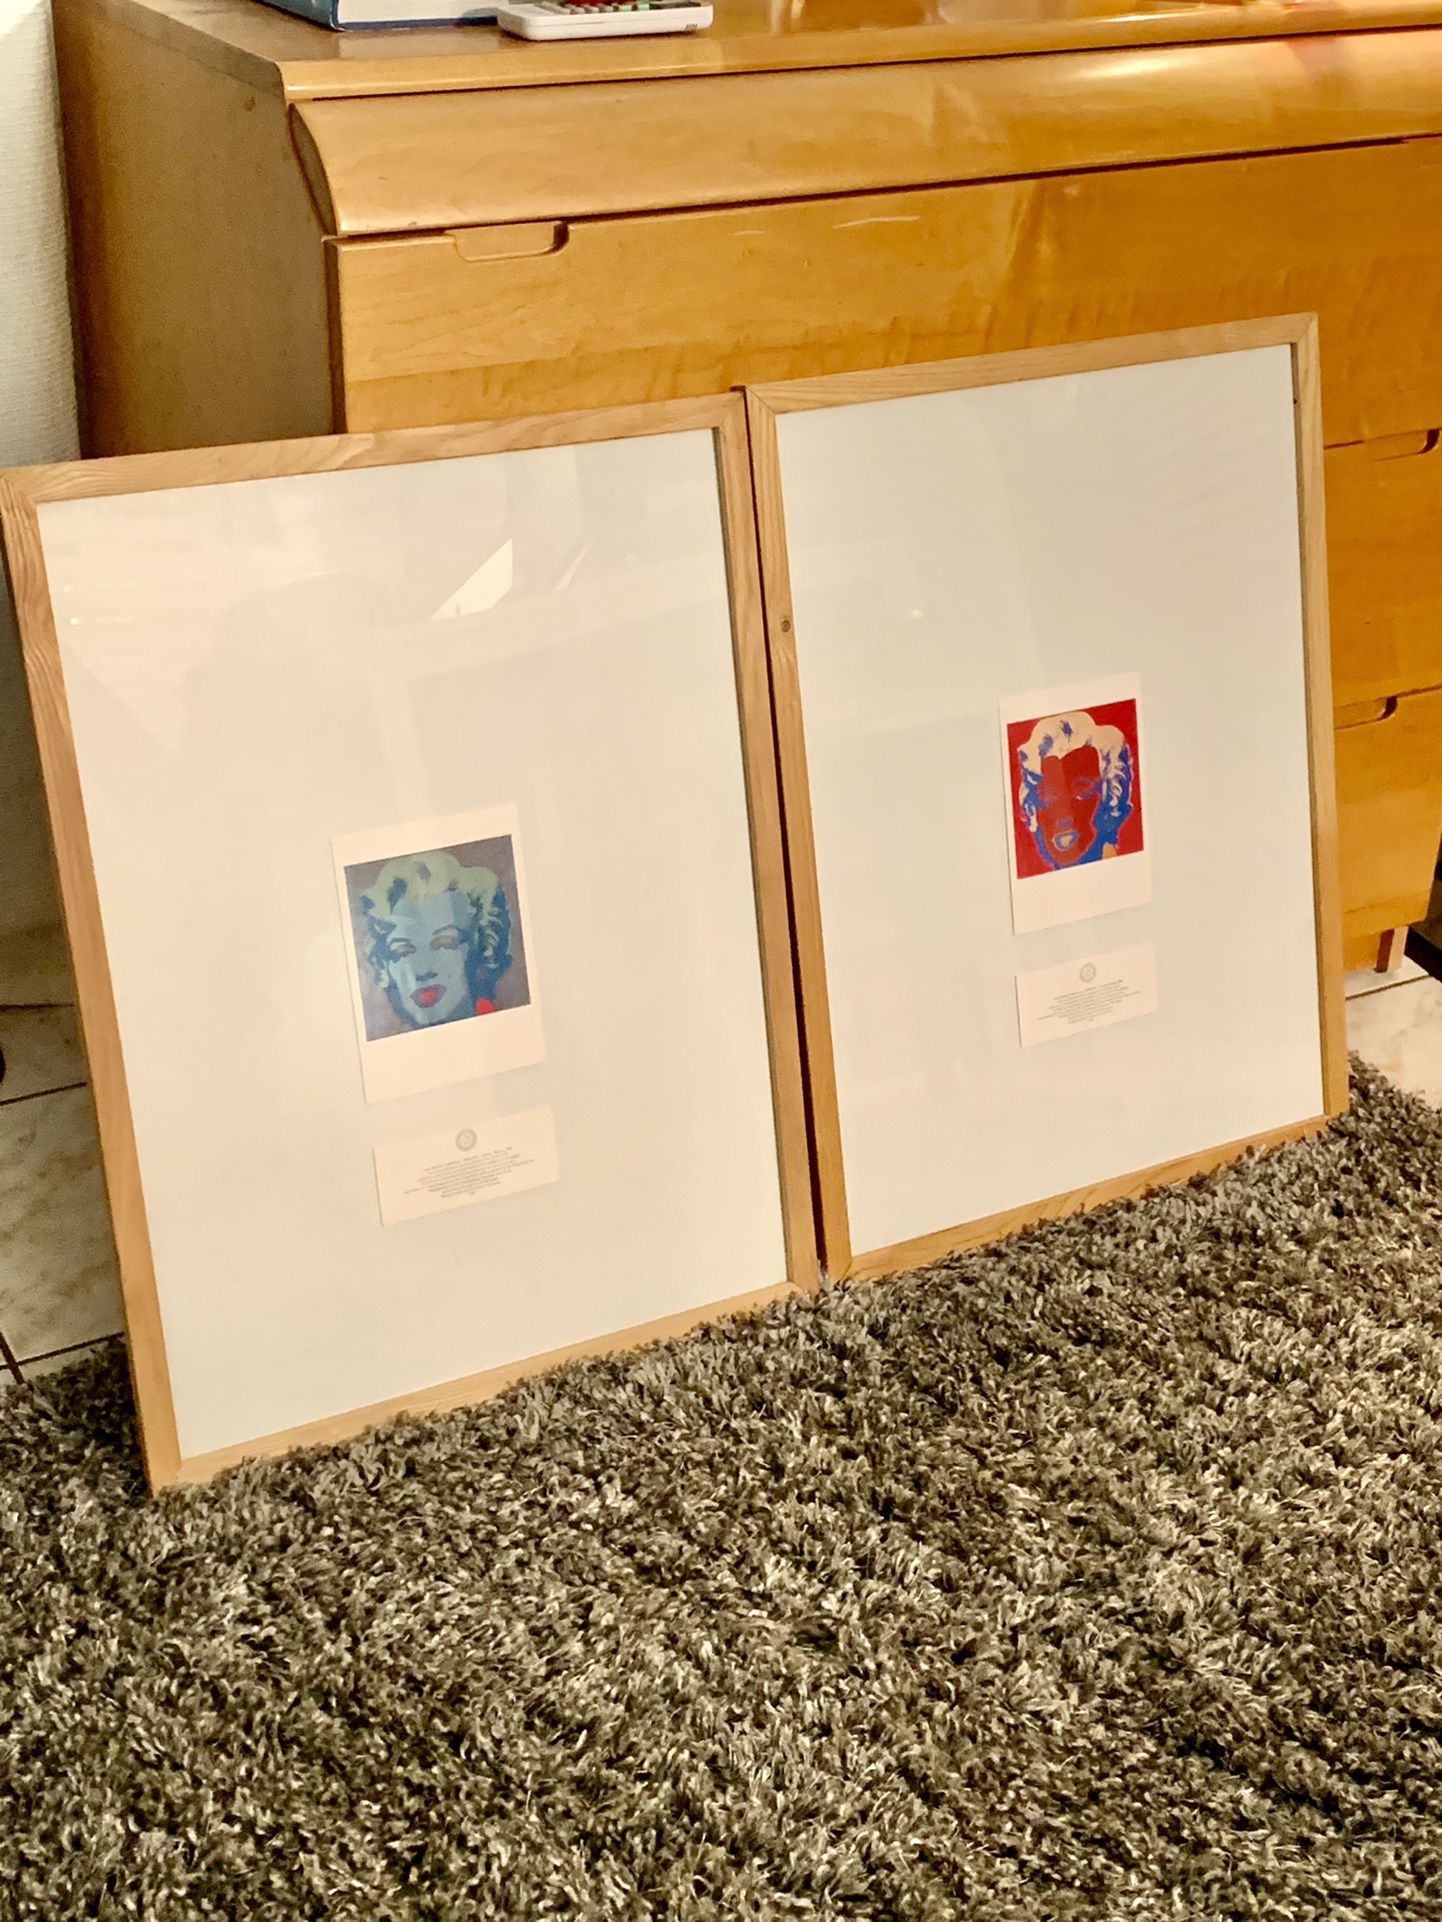 Art. Andy Warhol Vintage Cards Framed Kendall Area Pick Up 